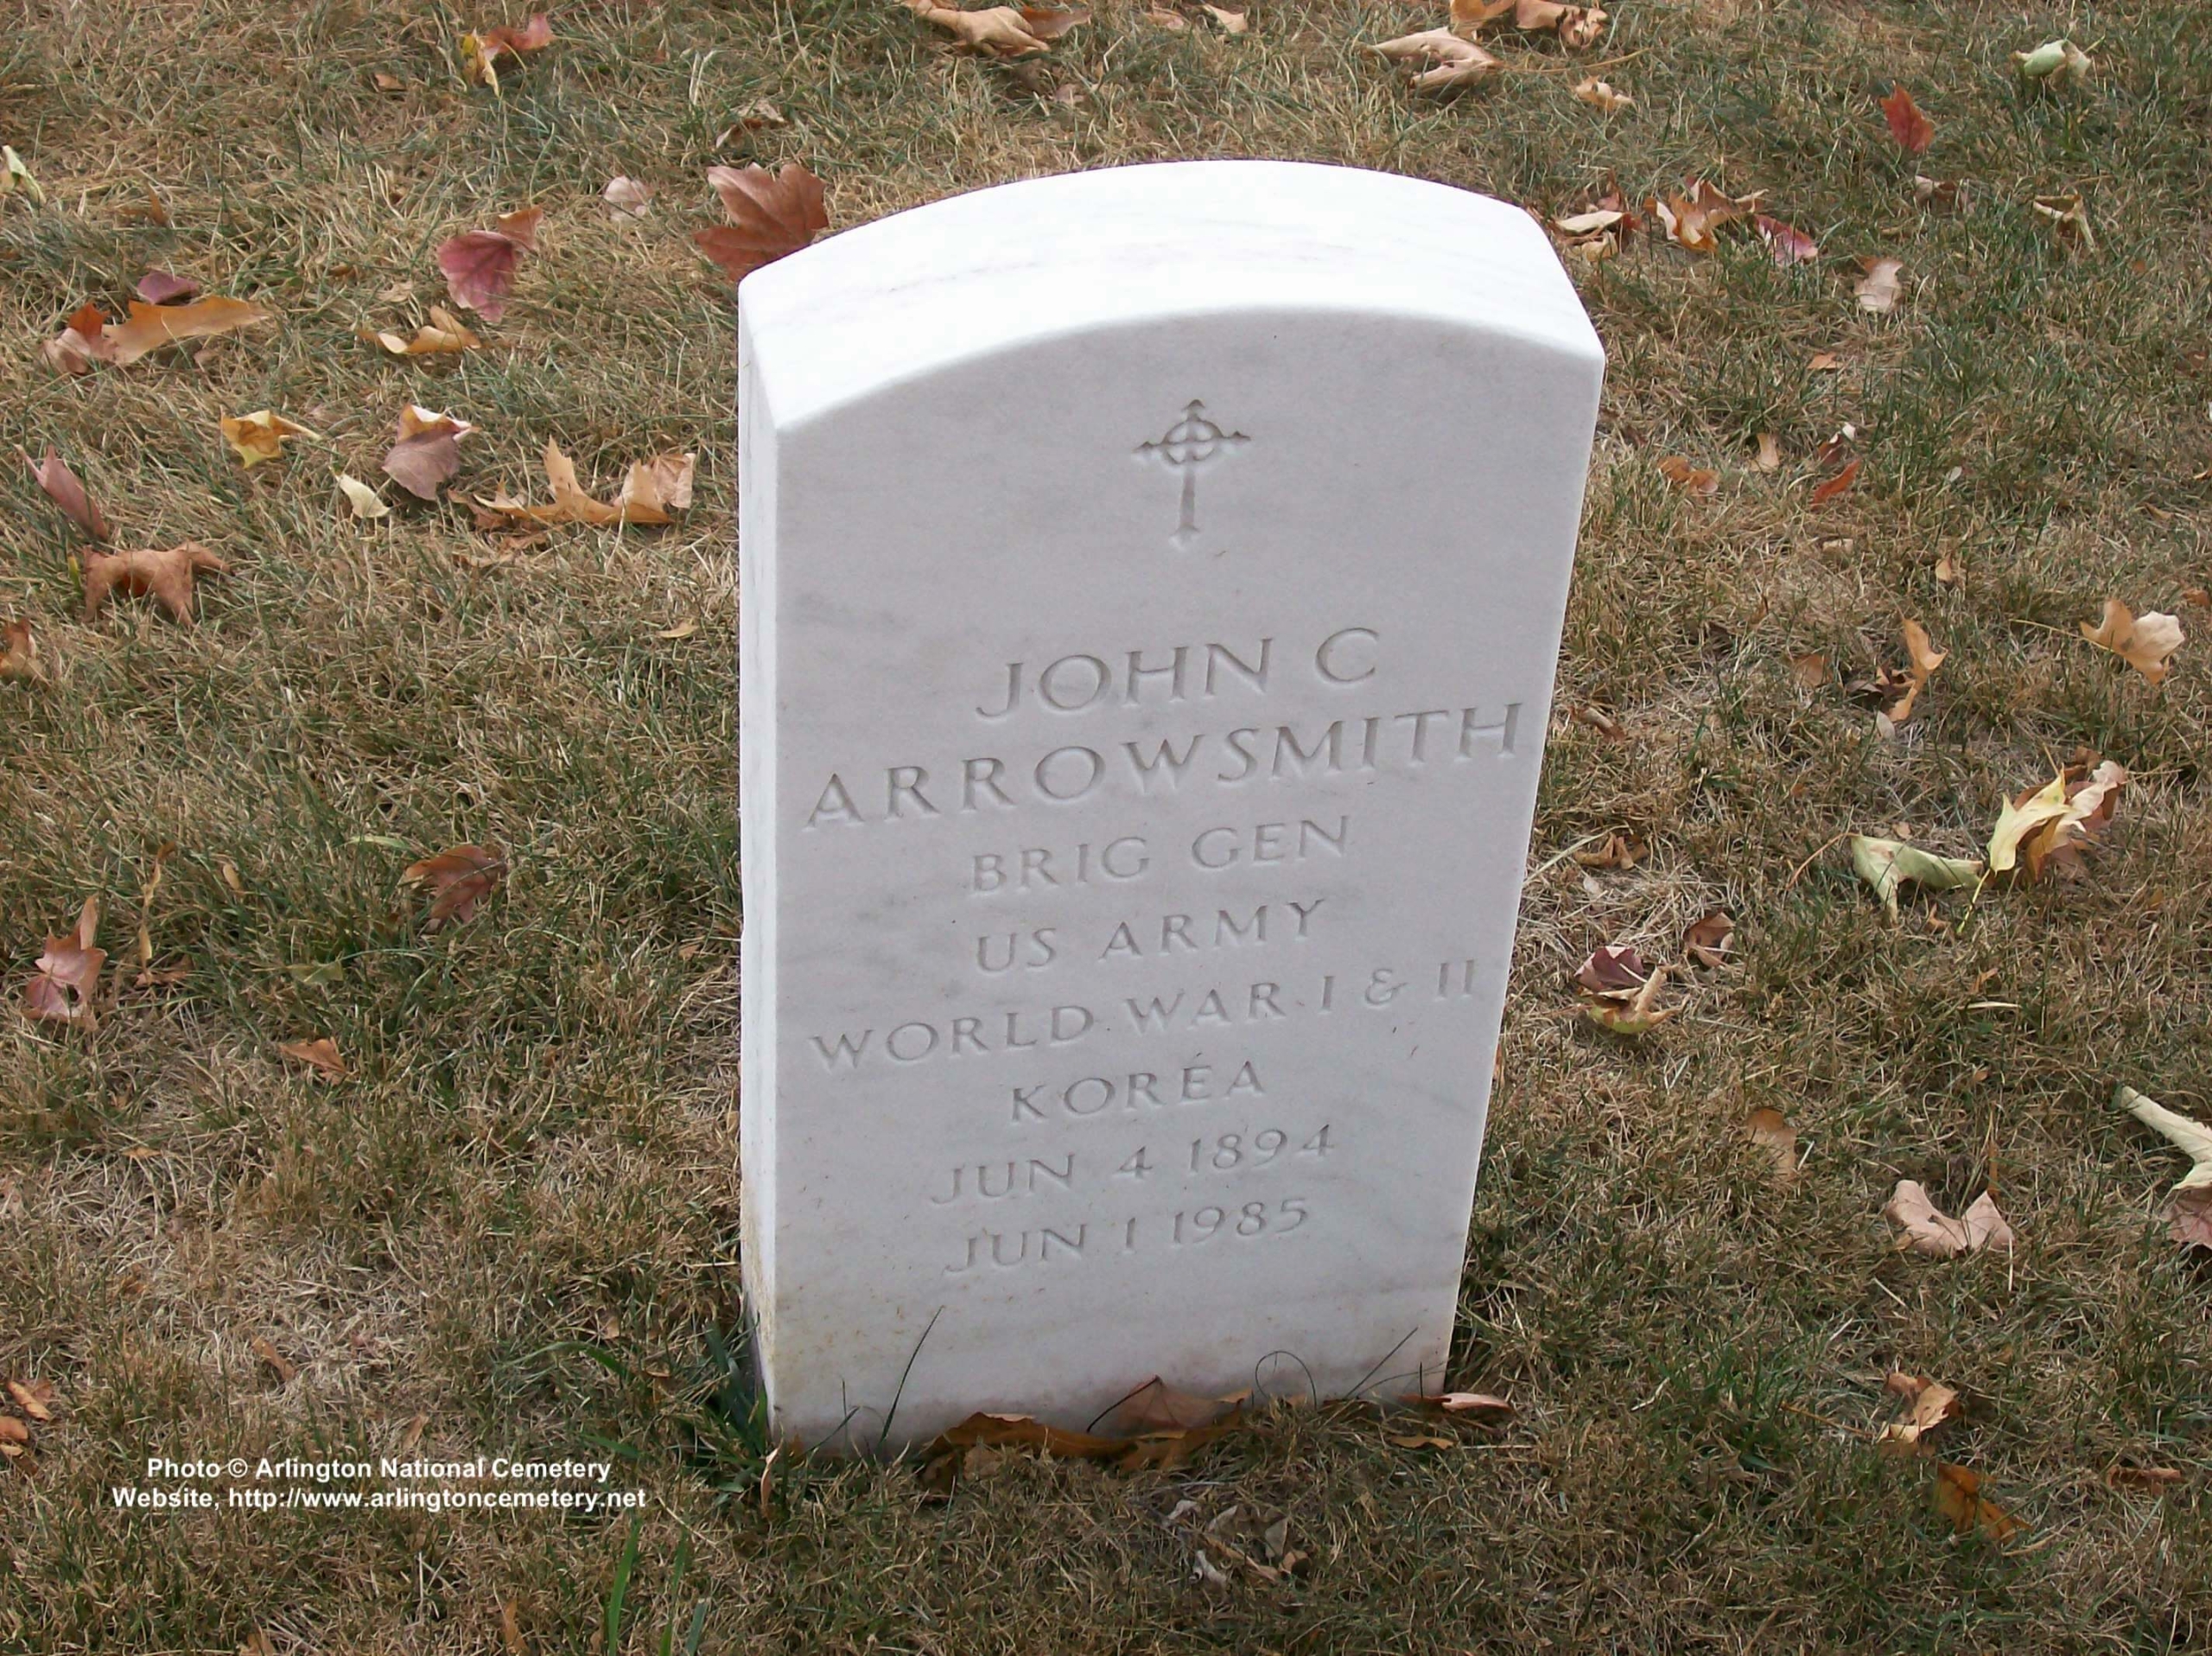 jcarrowsmith-gravesite-photo-october-2007-001